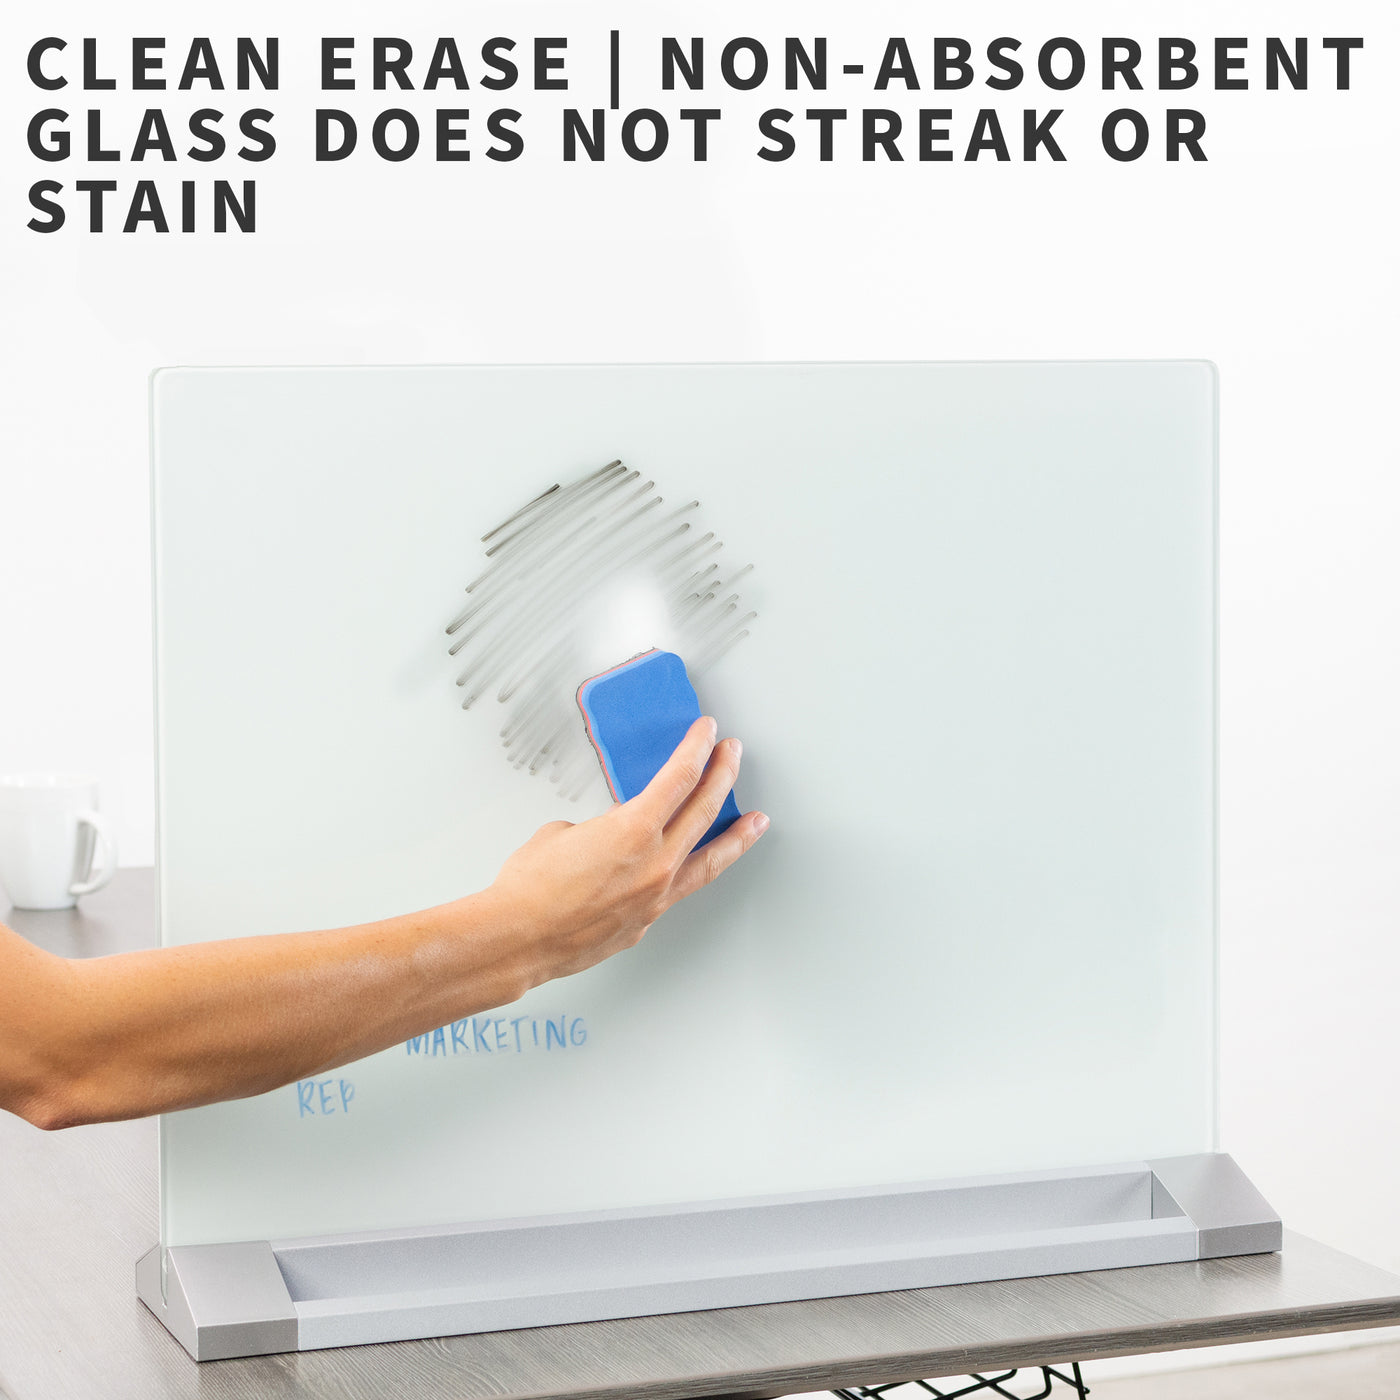 Clean dry-erase board that won't streak or stain.